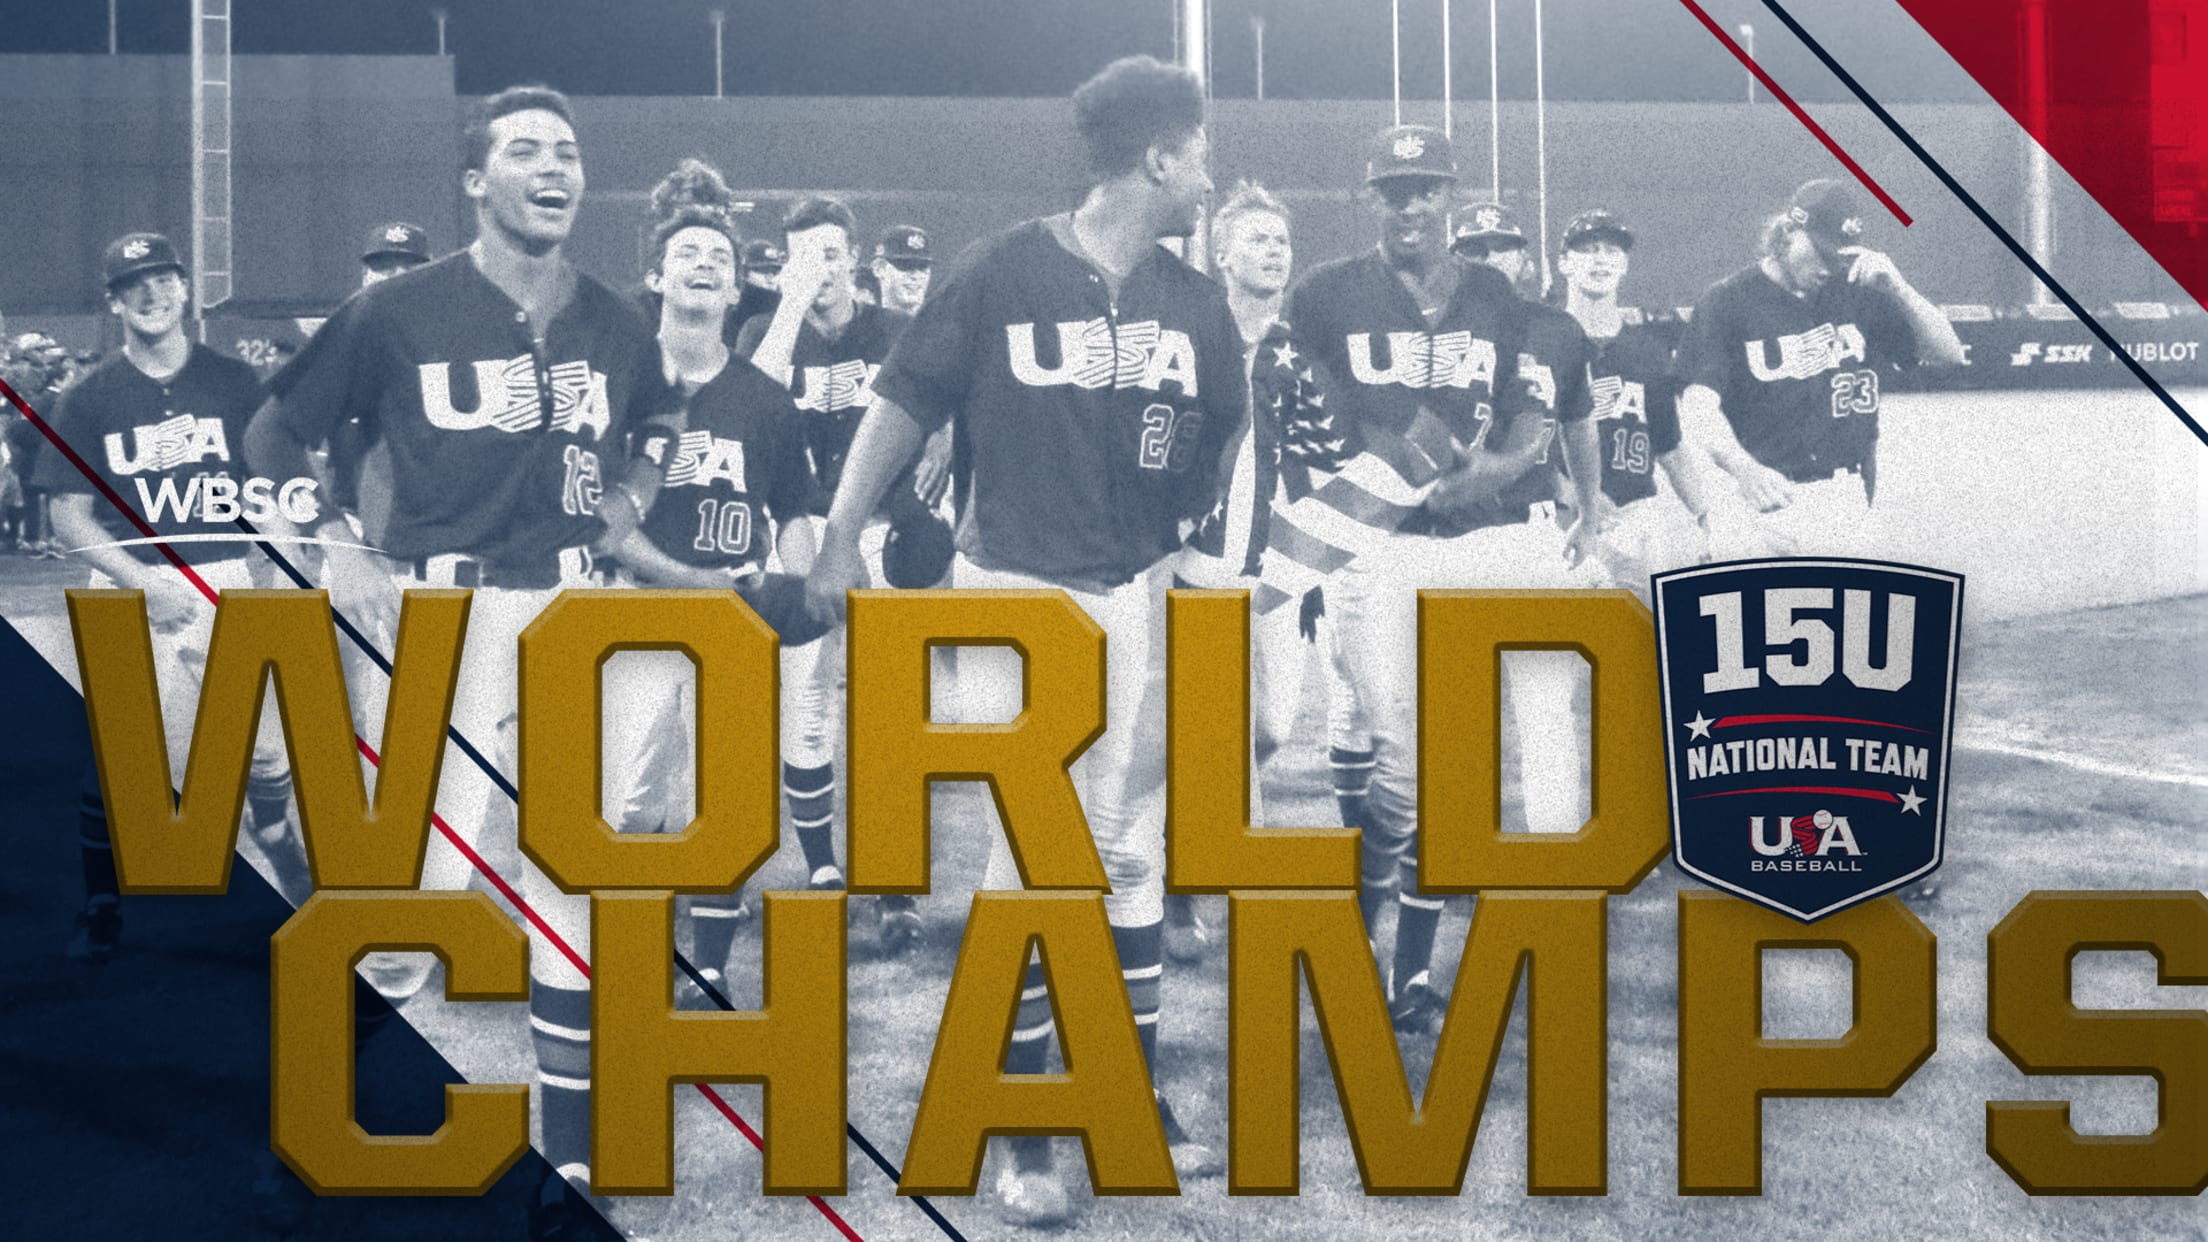 15U National Team Crowned World Champions USA Baseball